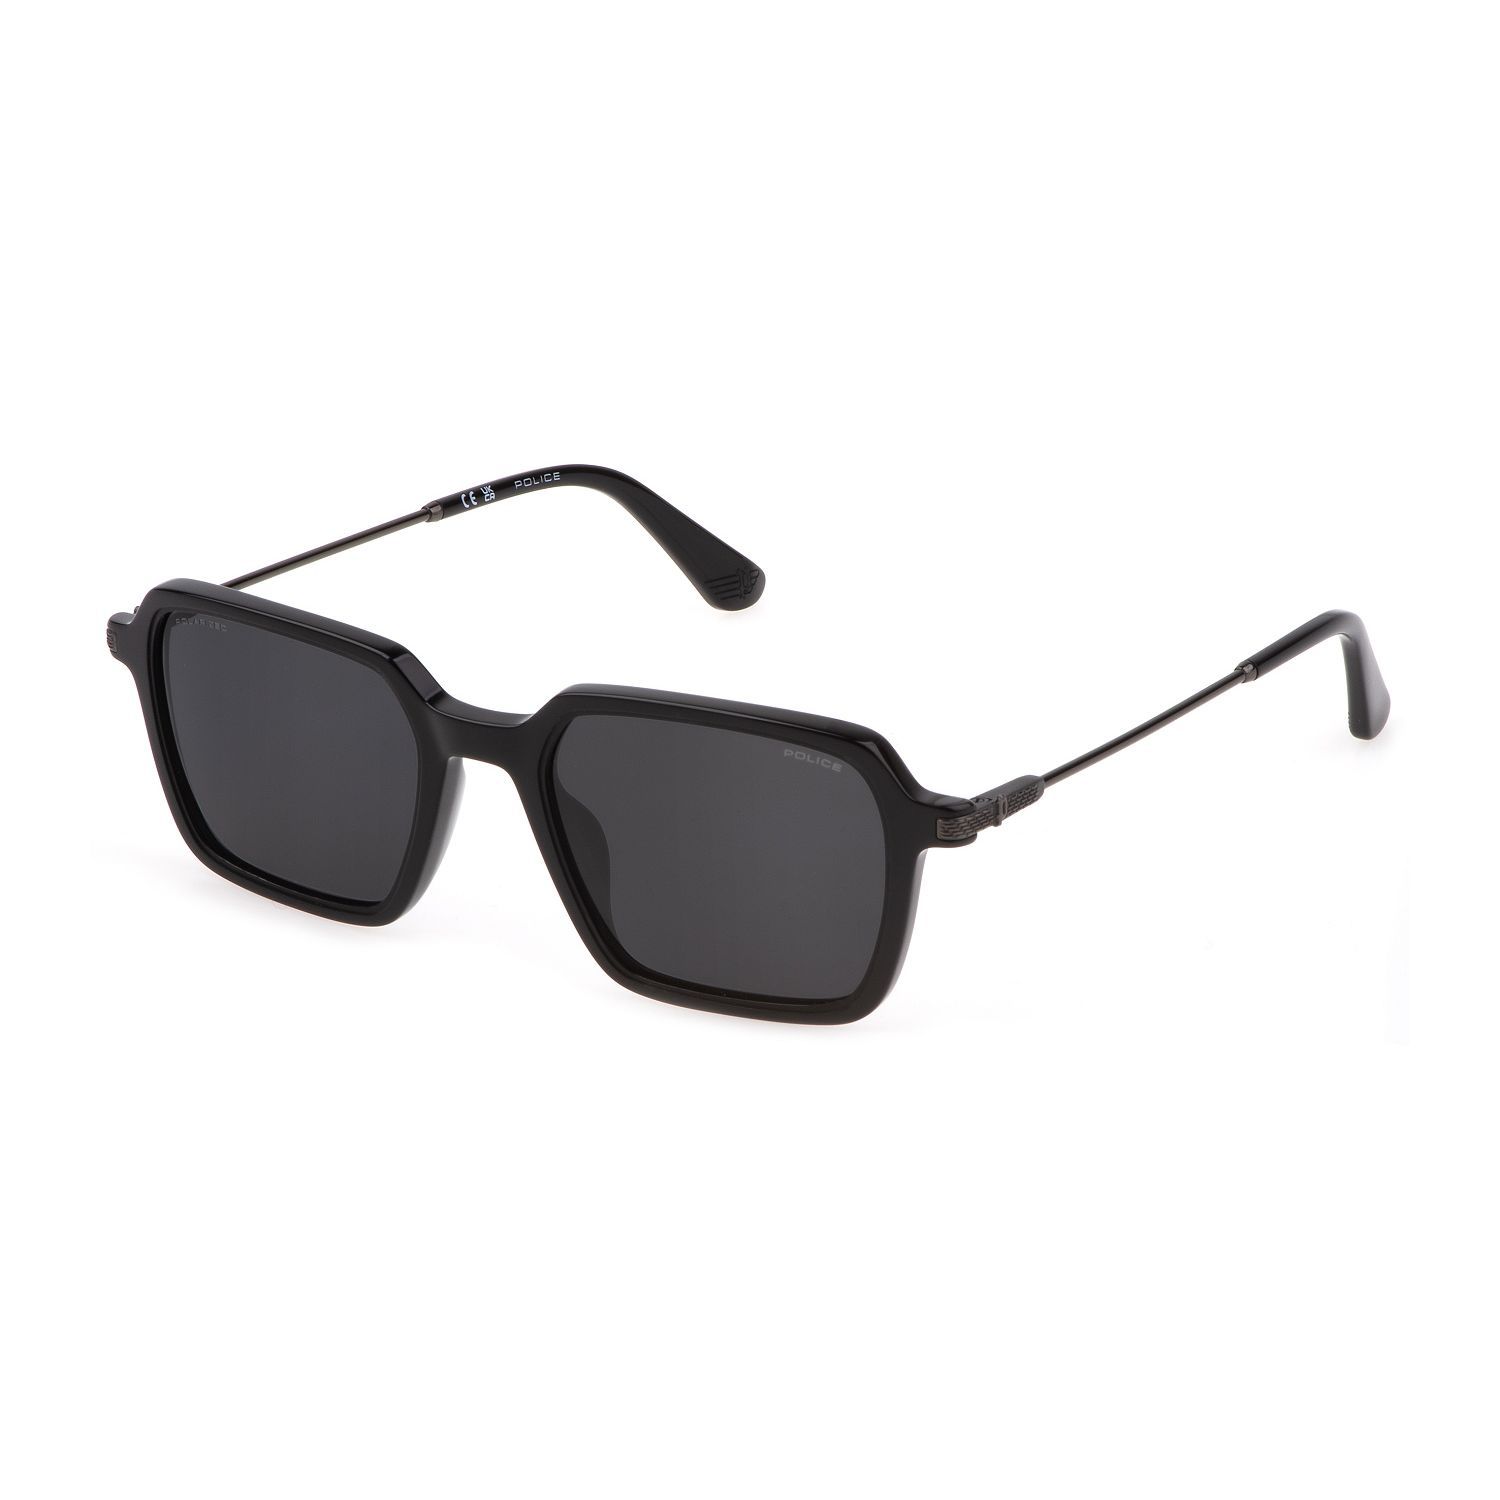 SPLL10M Square Sunglasses 700P - size 52